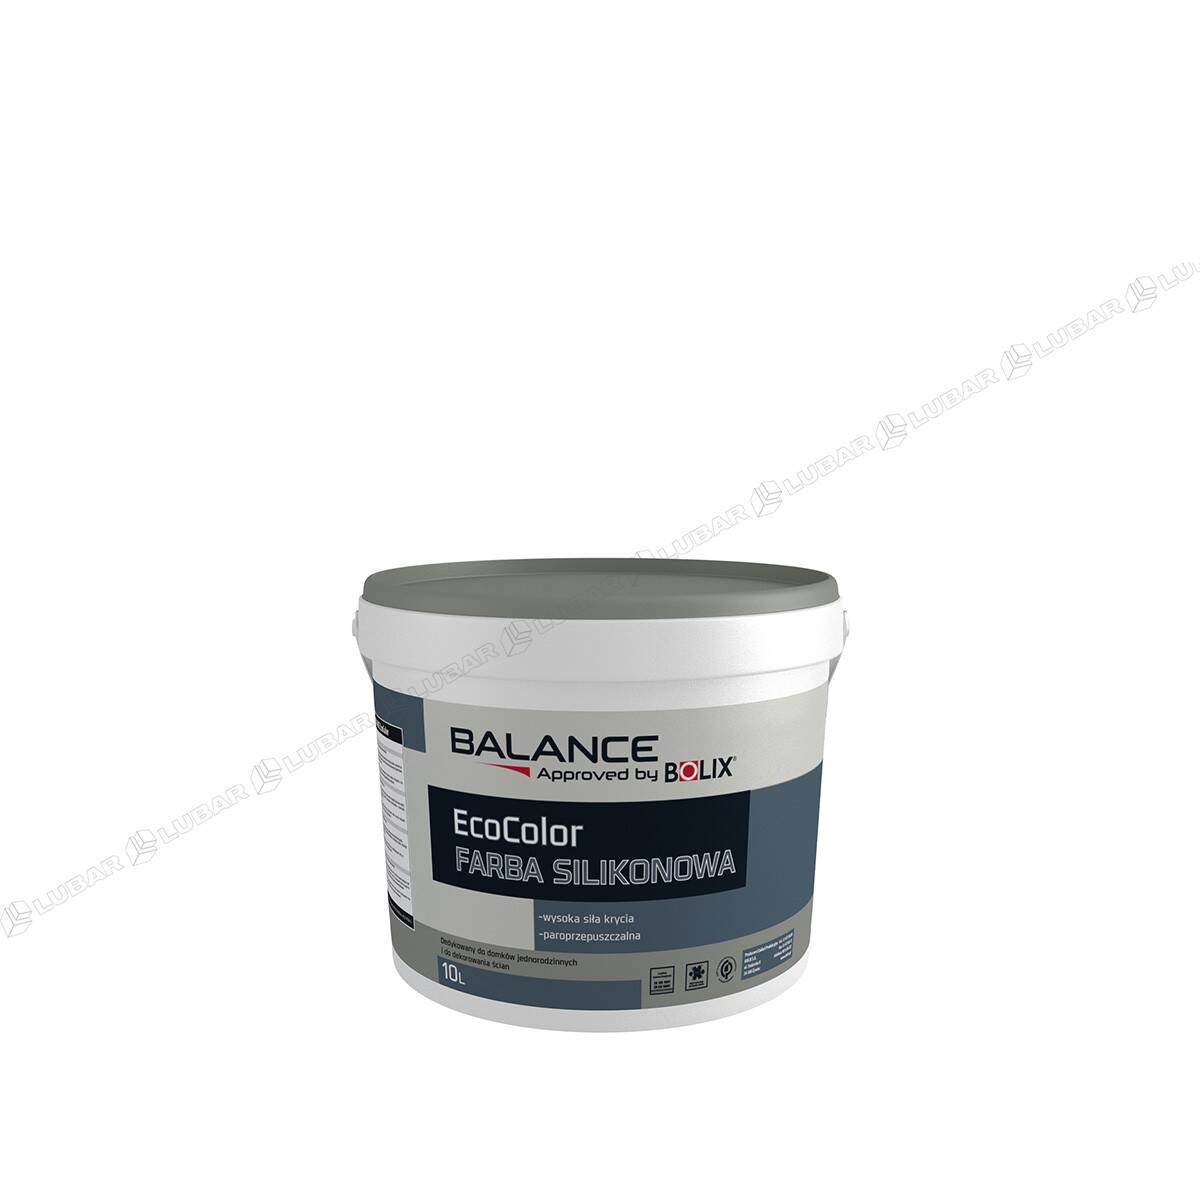 BOLIX Balance EcoColor Farba silikonowa 10l